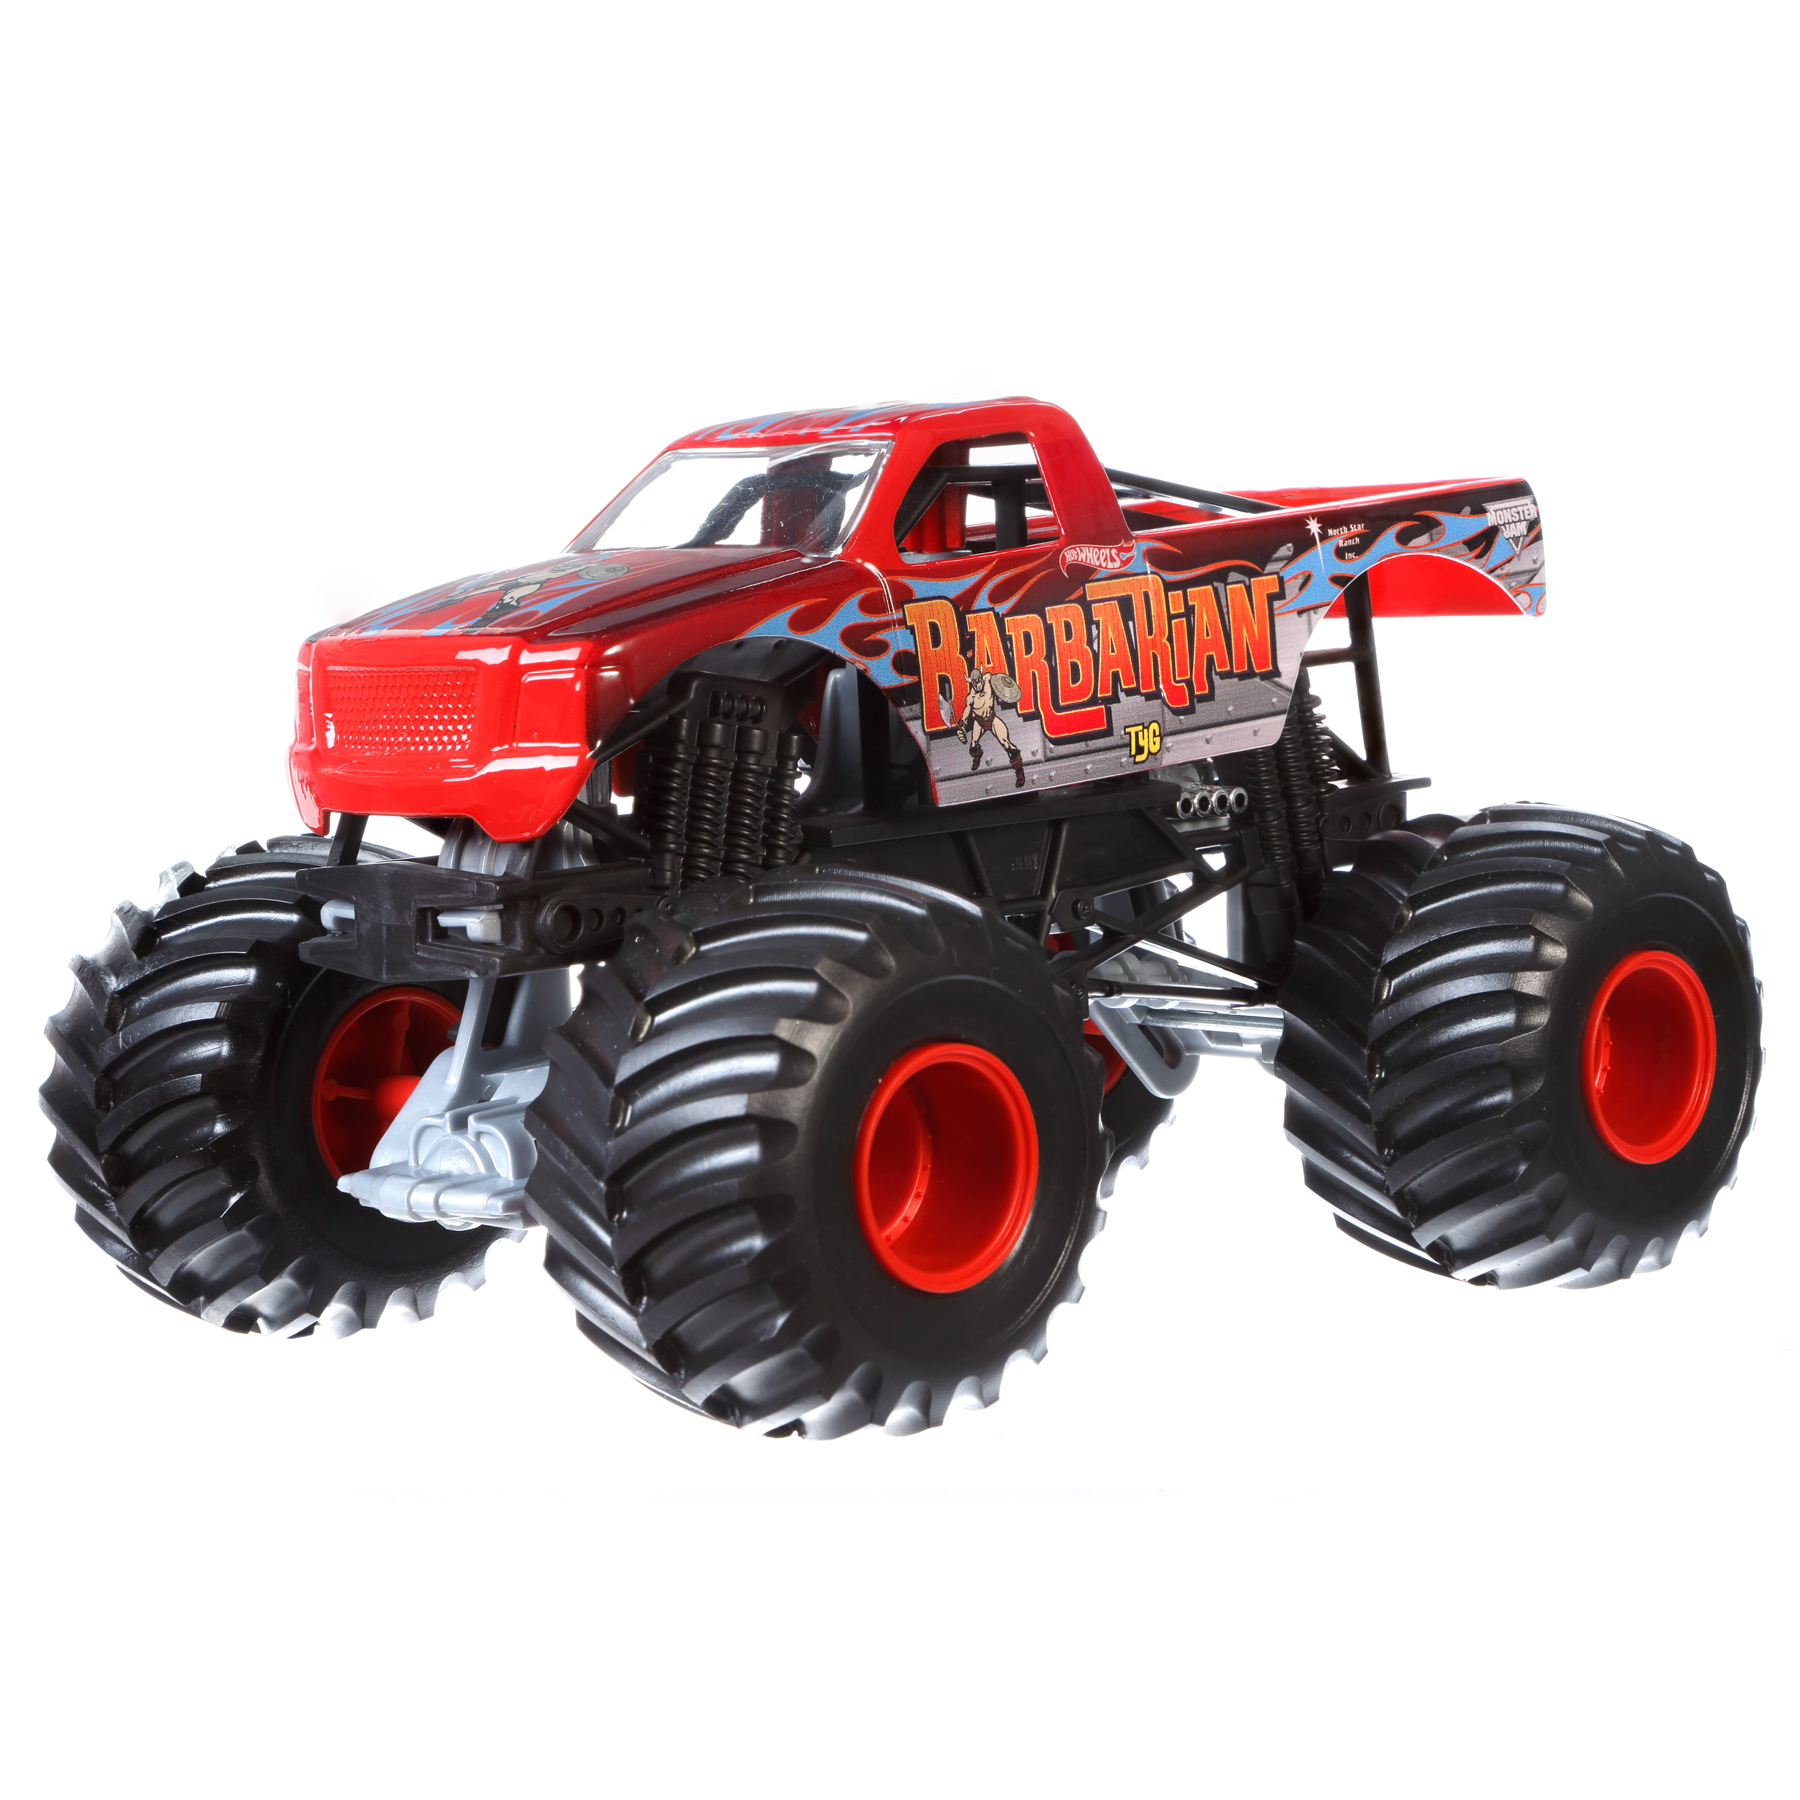 Hot Wheels 1:24 Monster Jam Barbarian Vehicle - Toys & Games 